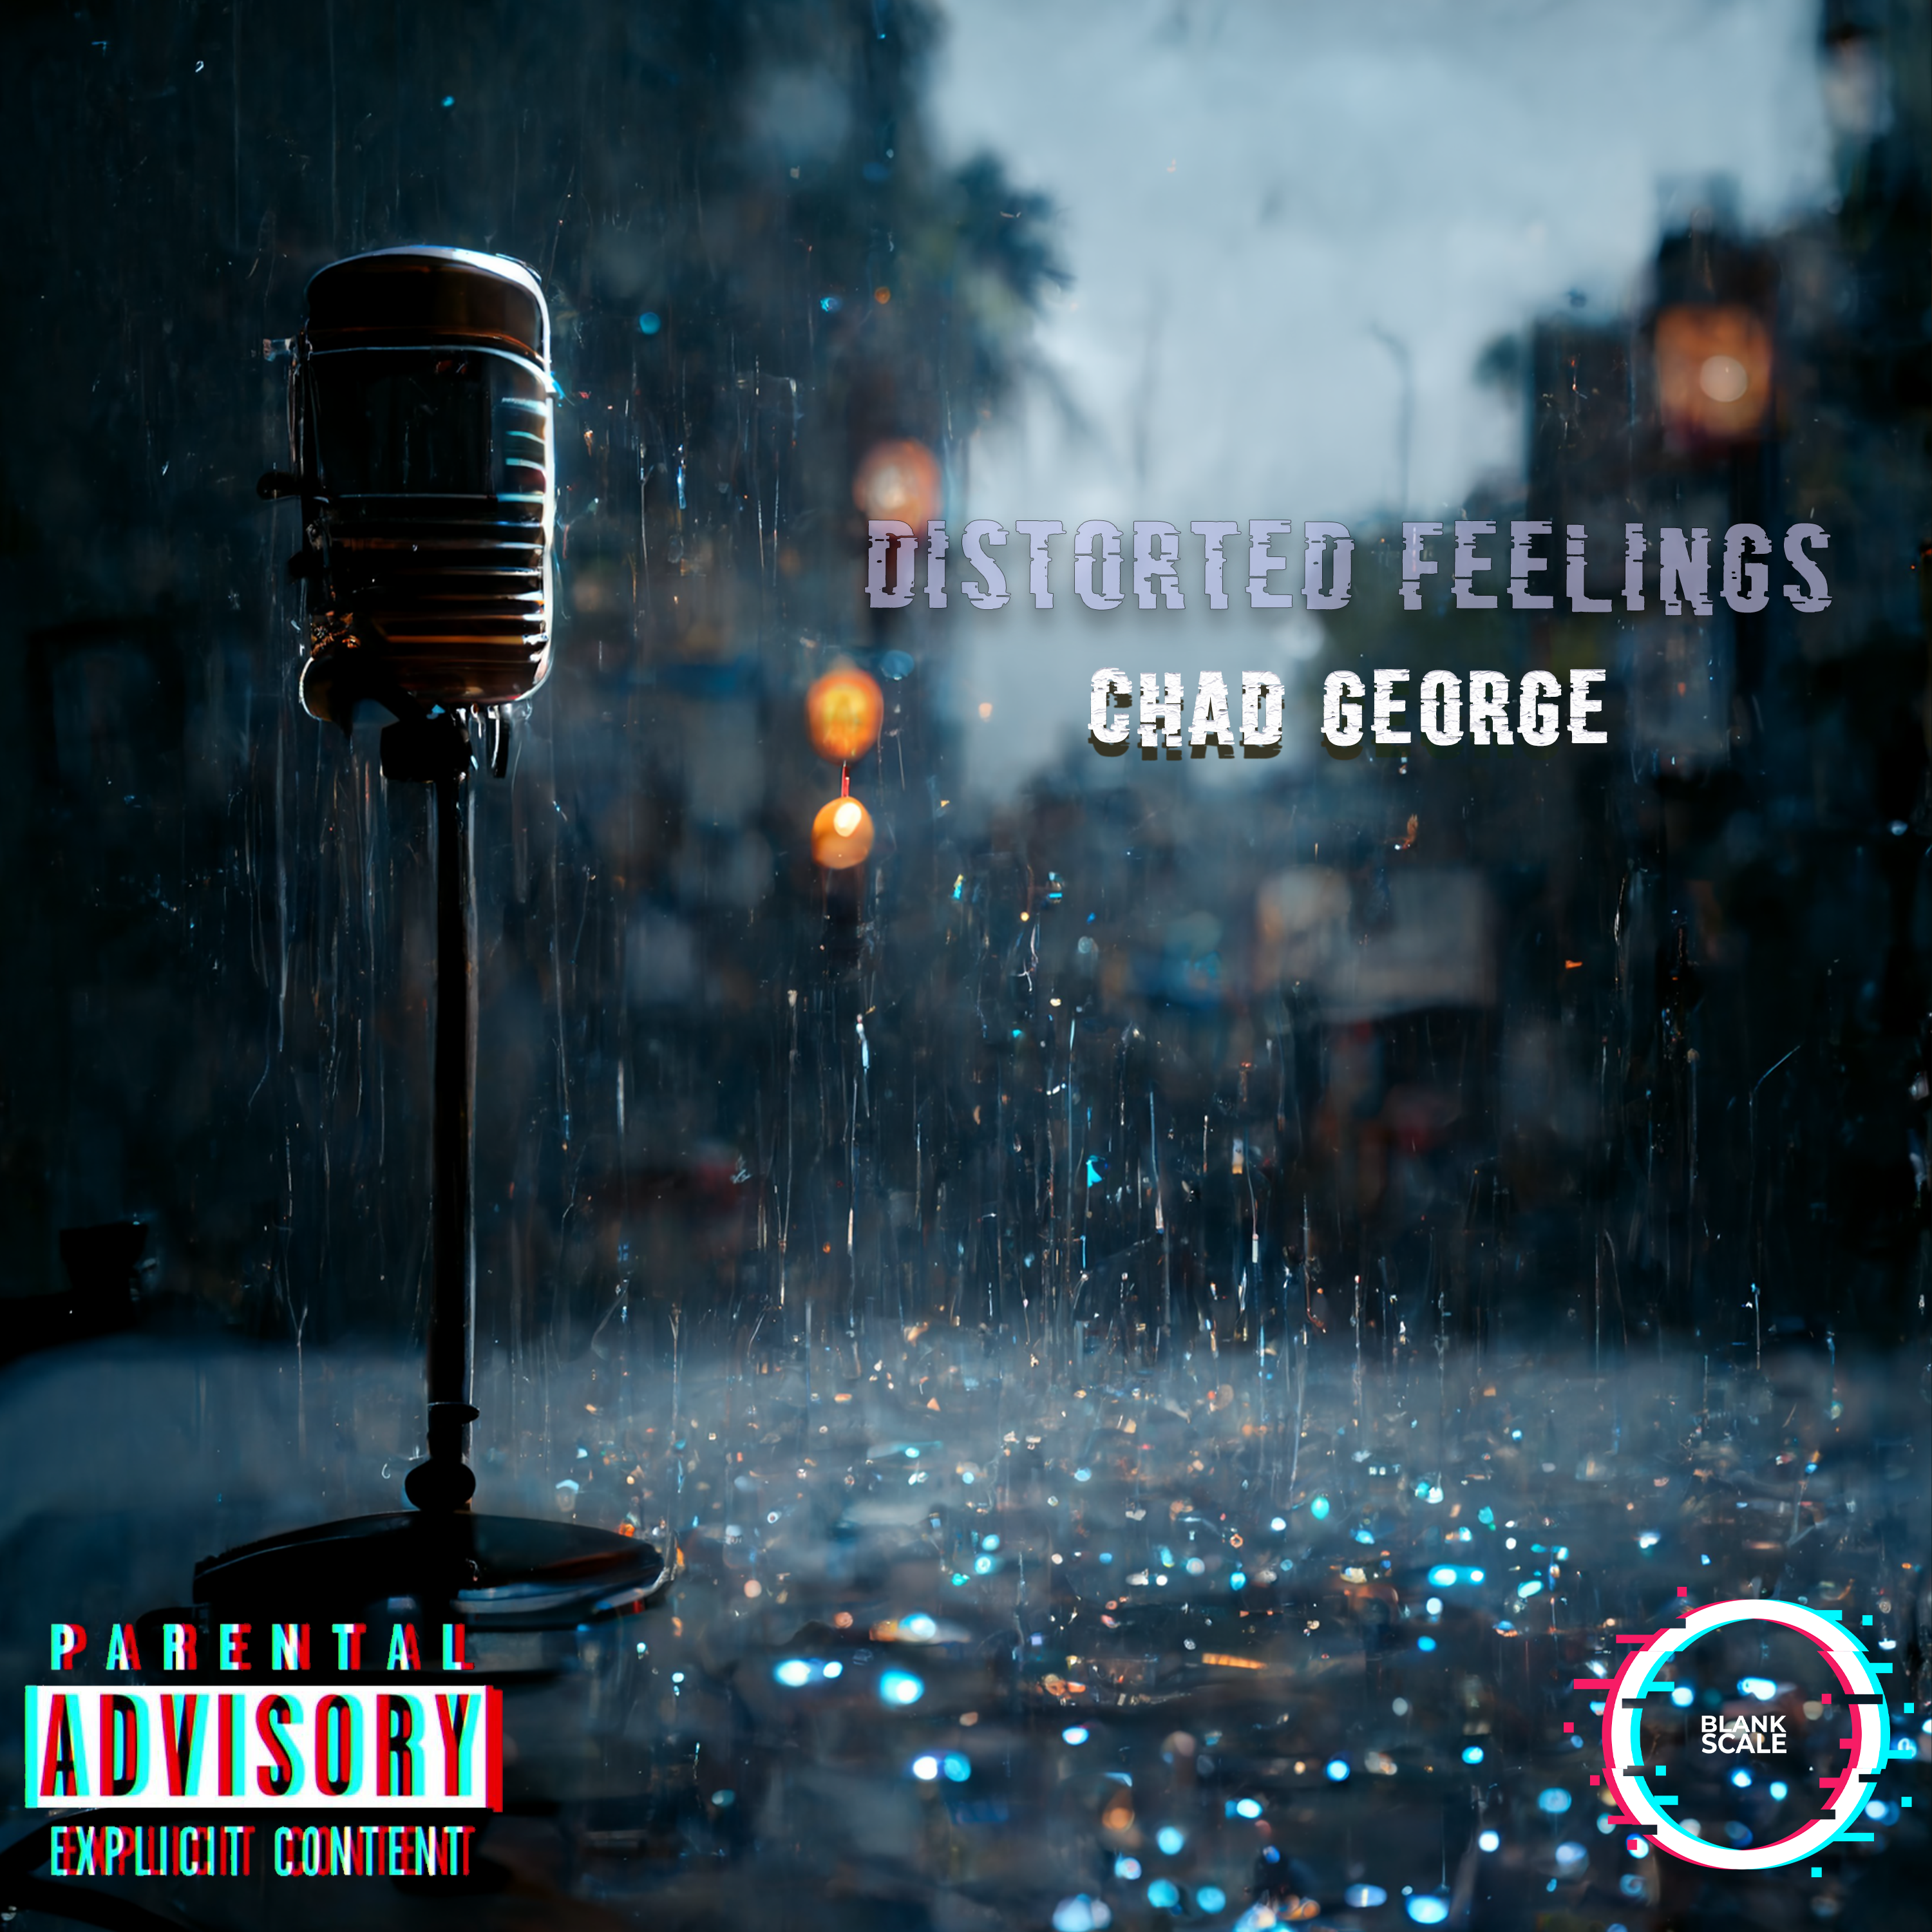 Chad George - 'Distorted Feelings (Blankscale Remix)'